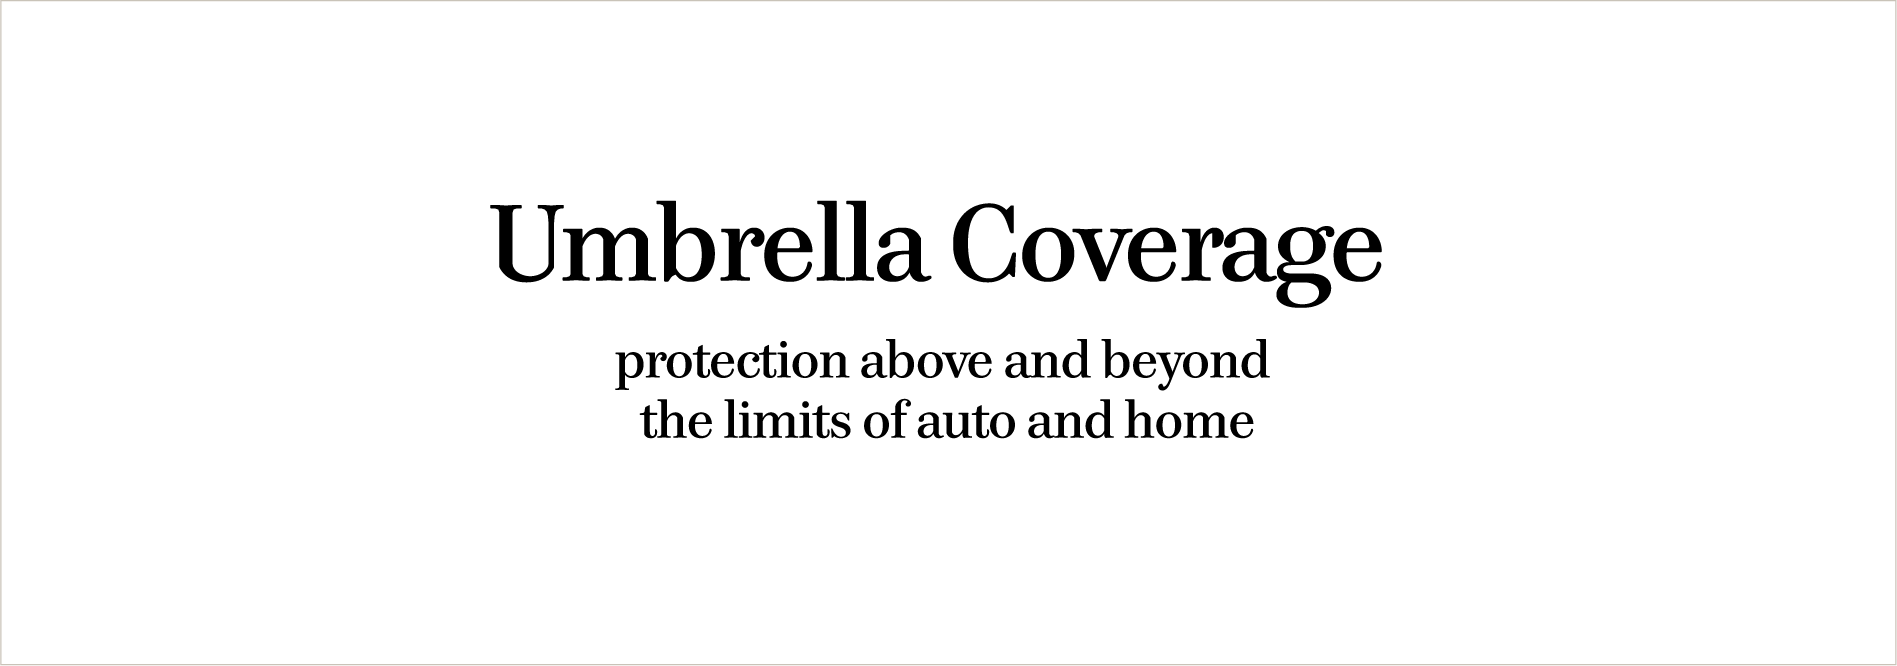 Umbrella insurance ad